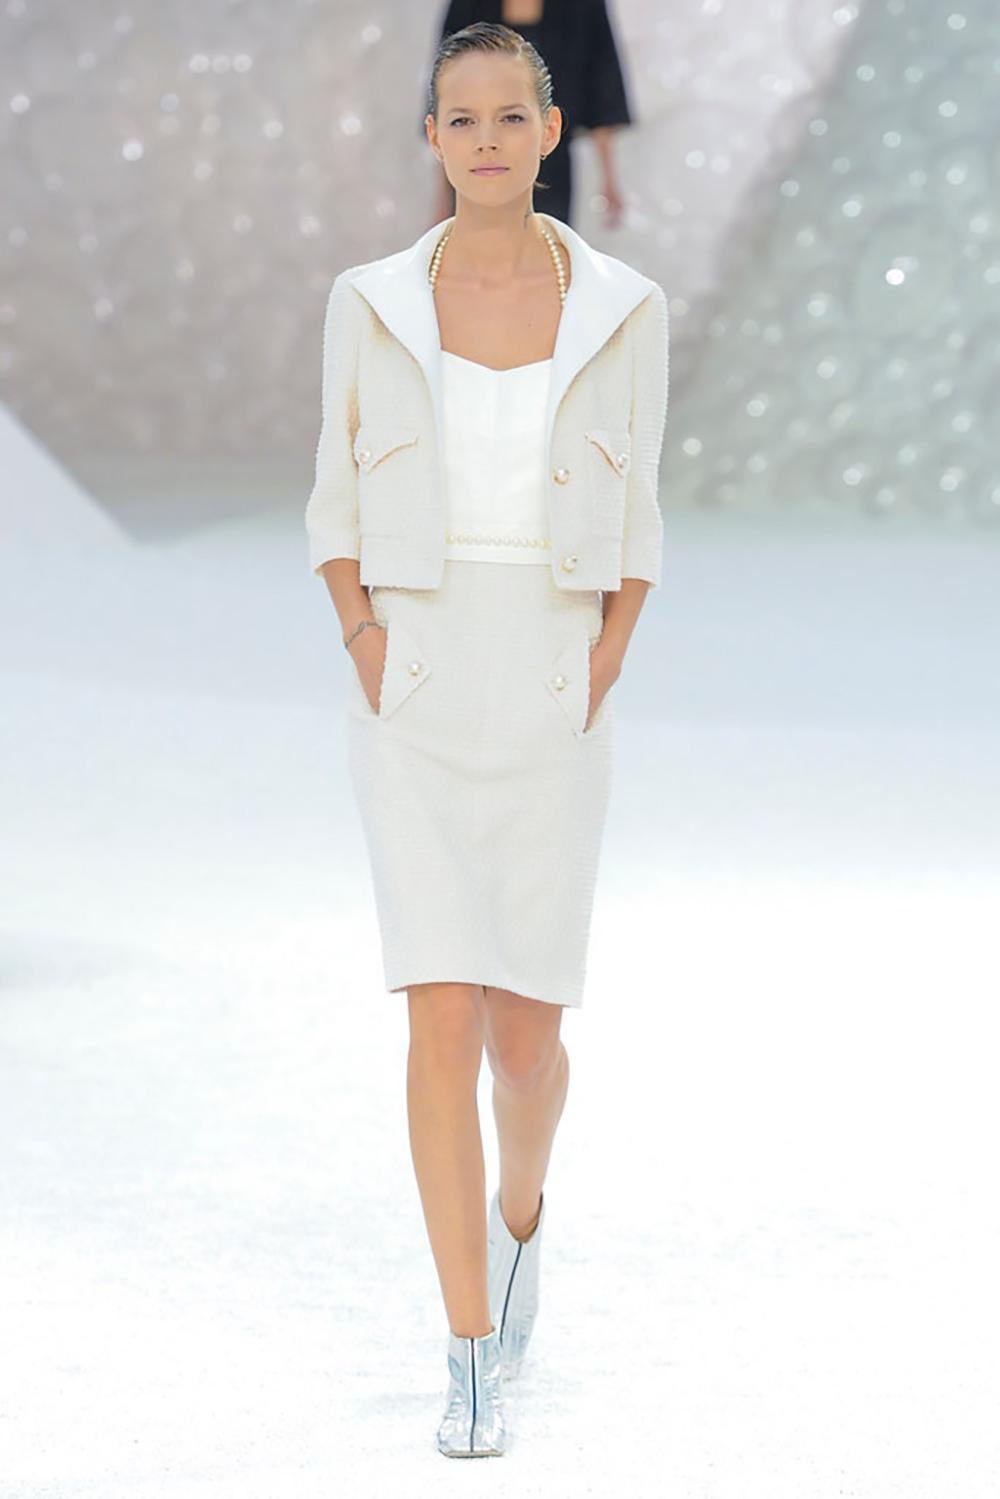 Chanel Amal Alamuddin Style Runway Tweed Dress For Sale 2